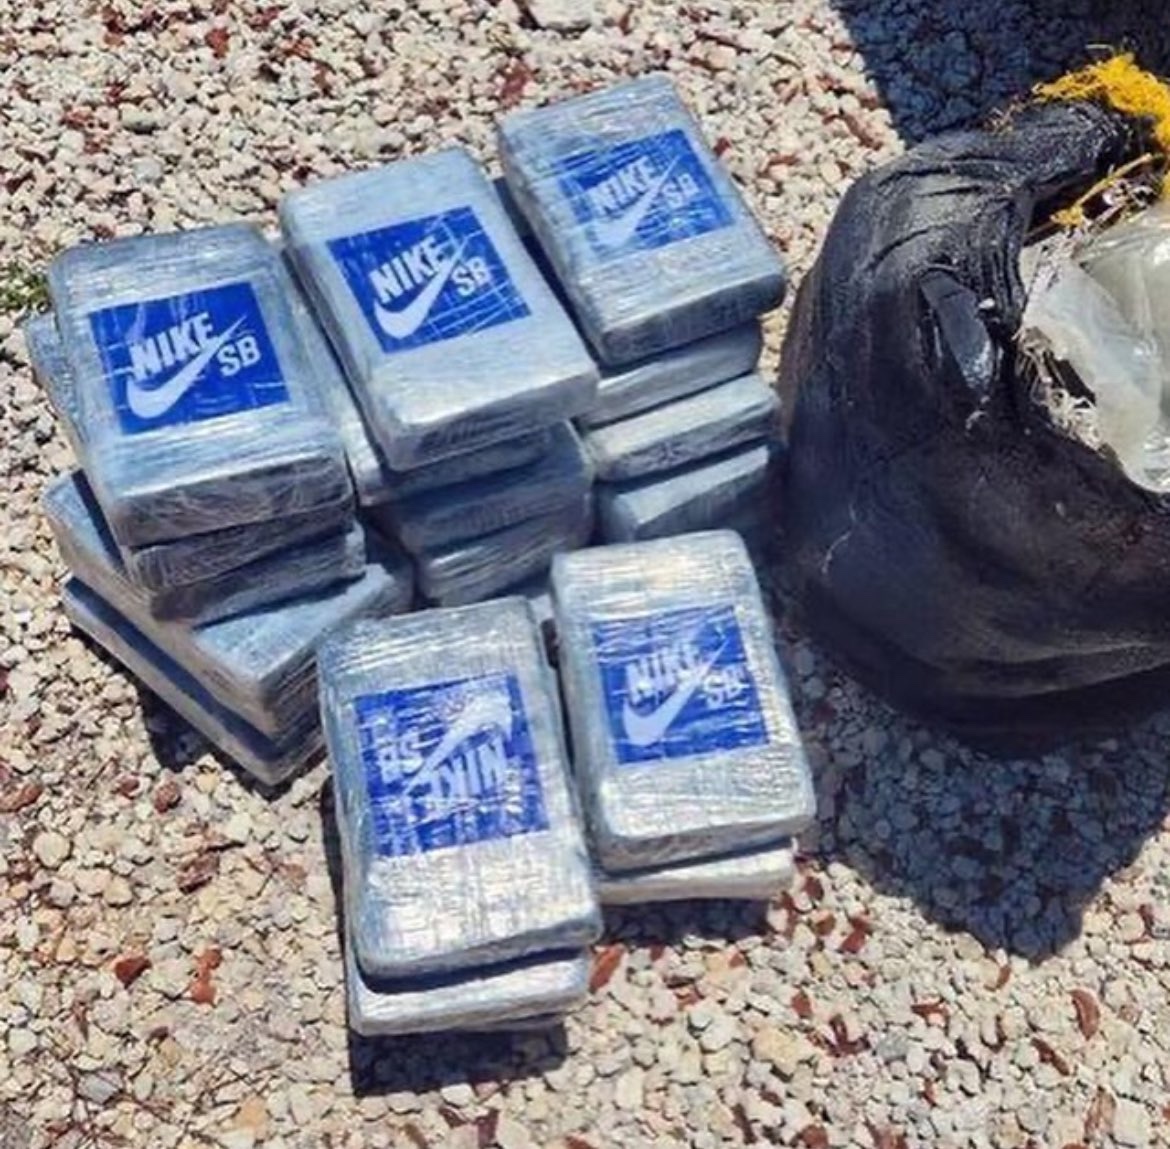 Florida Divers Find Million Dollar nike leather SB Cocaine Haul